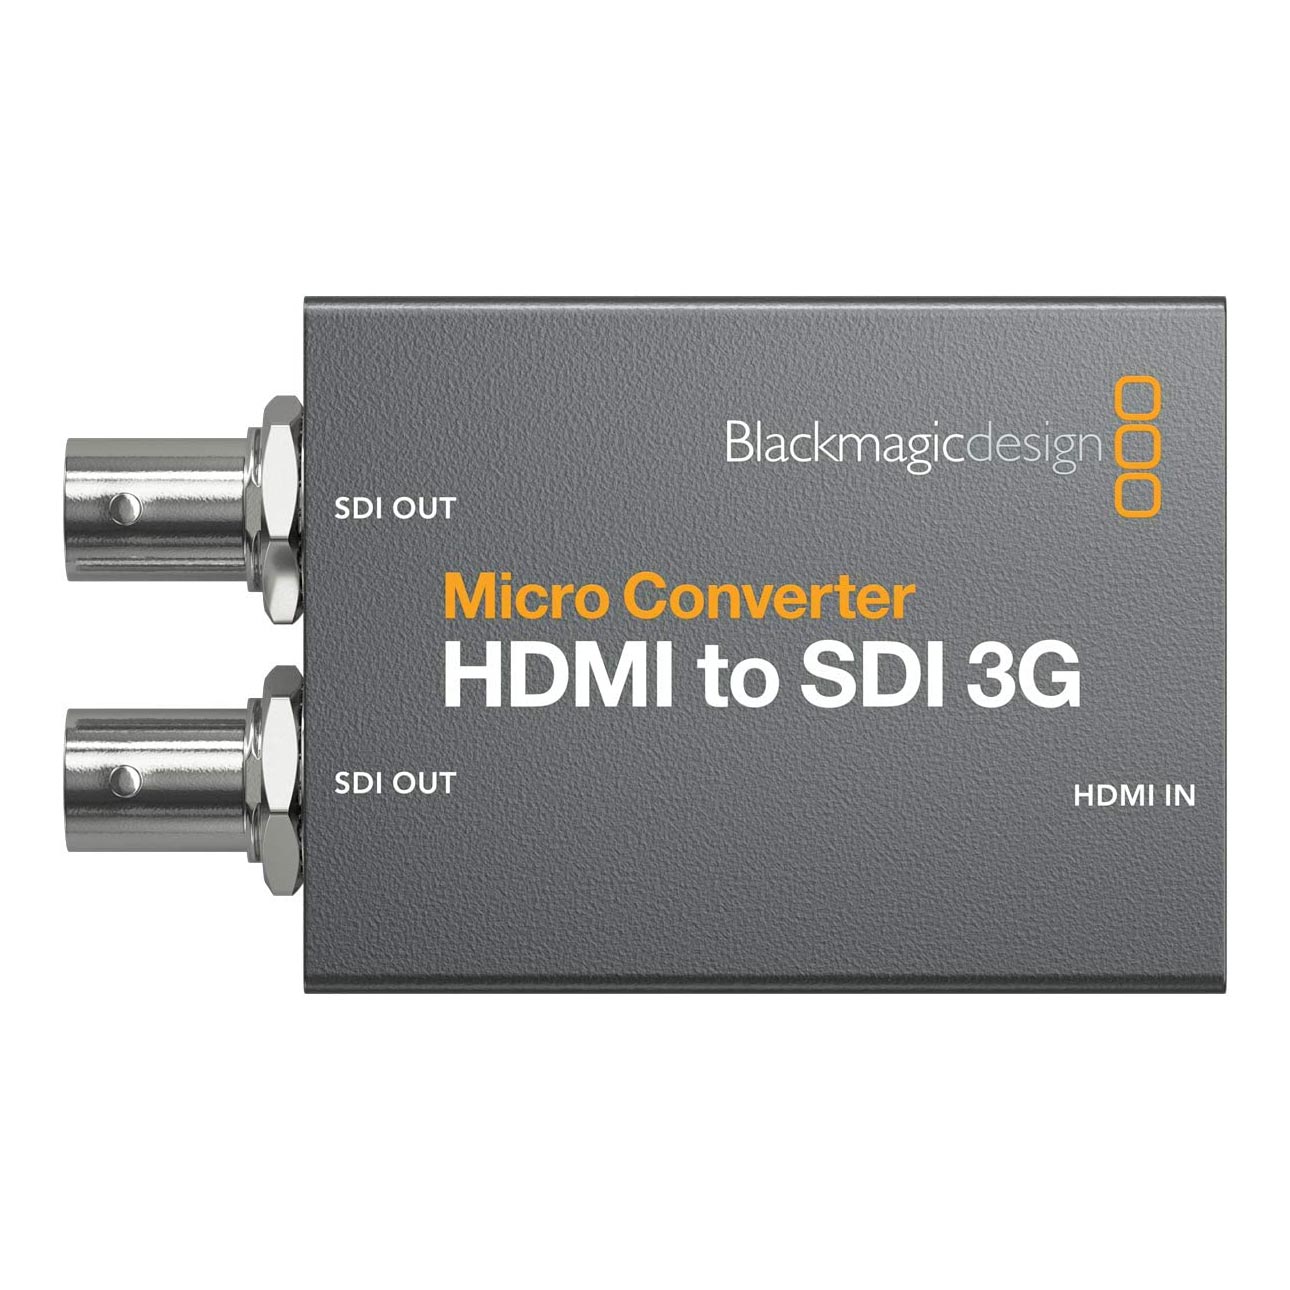 Конвертер Blackmagic Design Micro Converter HDMI to SDI 3G PSU wiistar mini hd 1080p 3g hdmi to sdi converter box support sd hd sdi 3g sdi signals showing hdmi hdmi2sdi sdi to hdmi